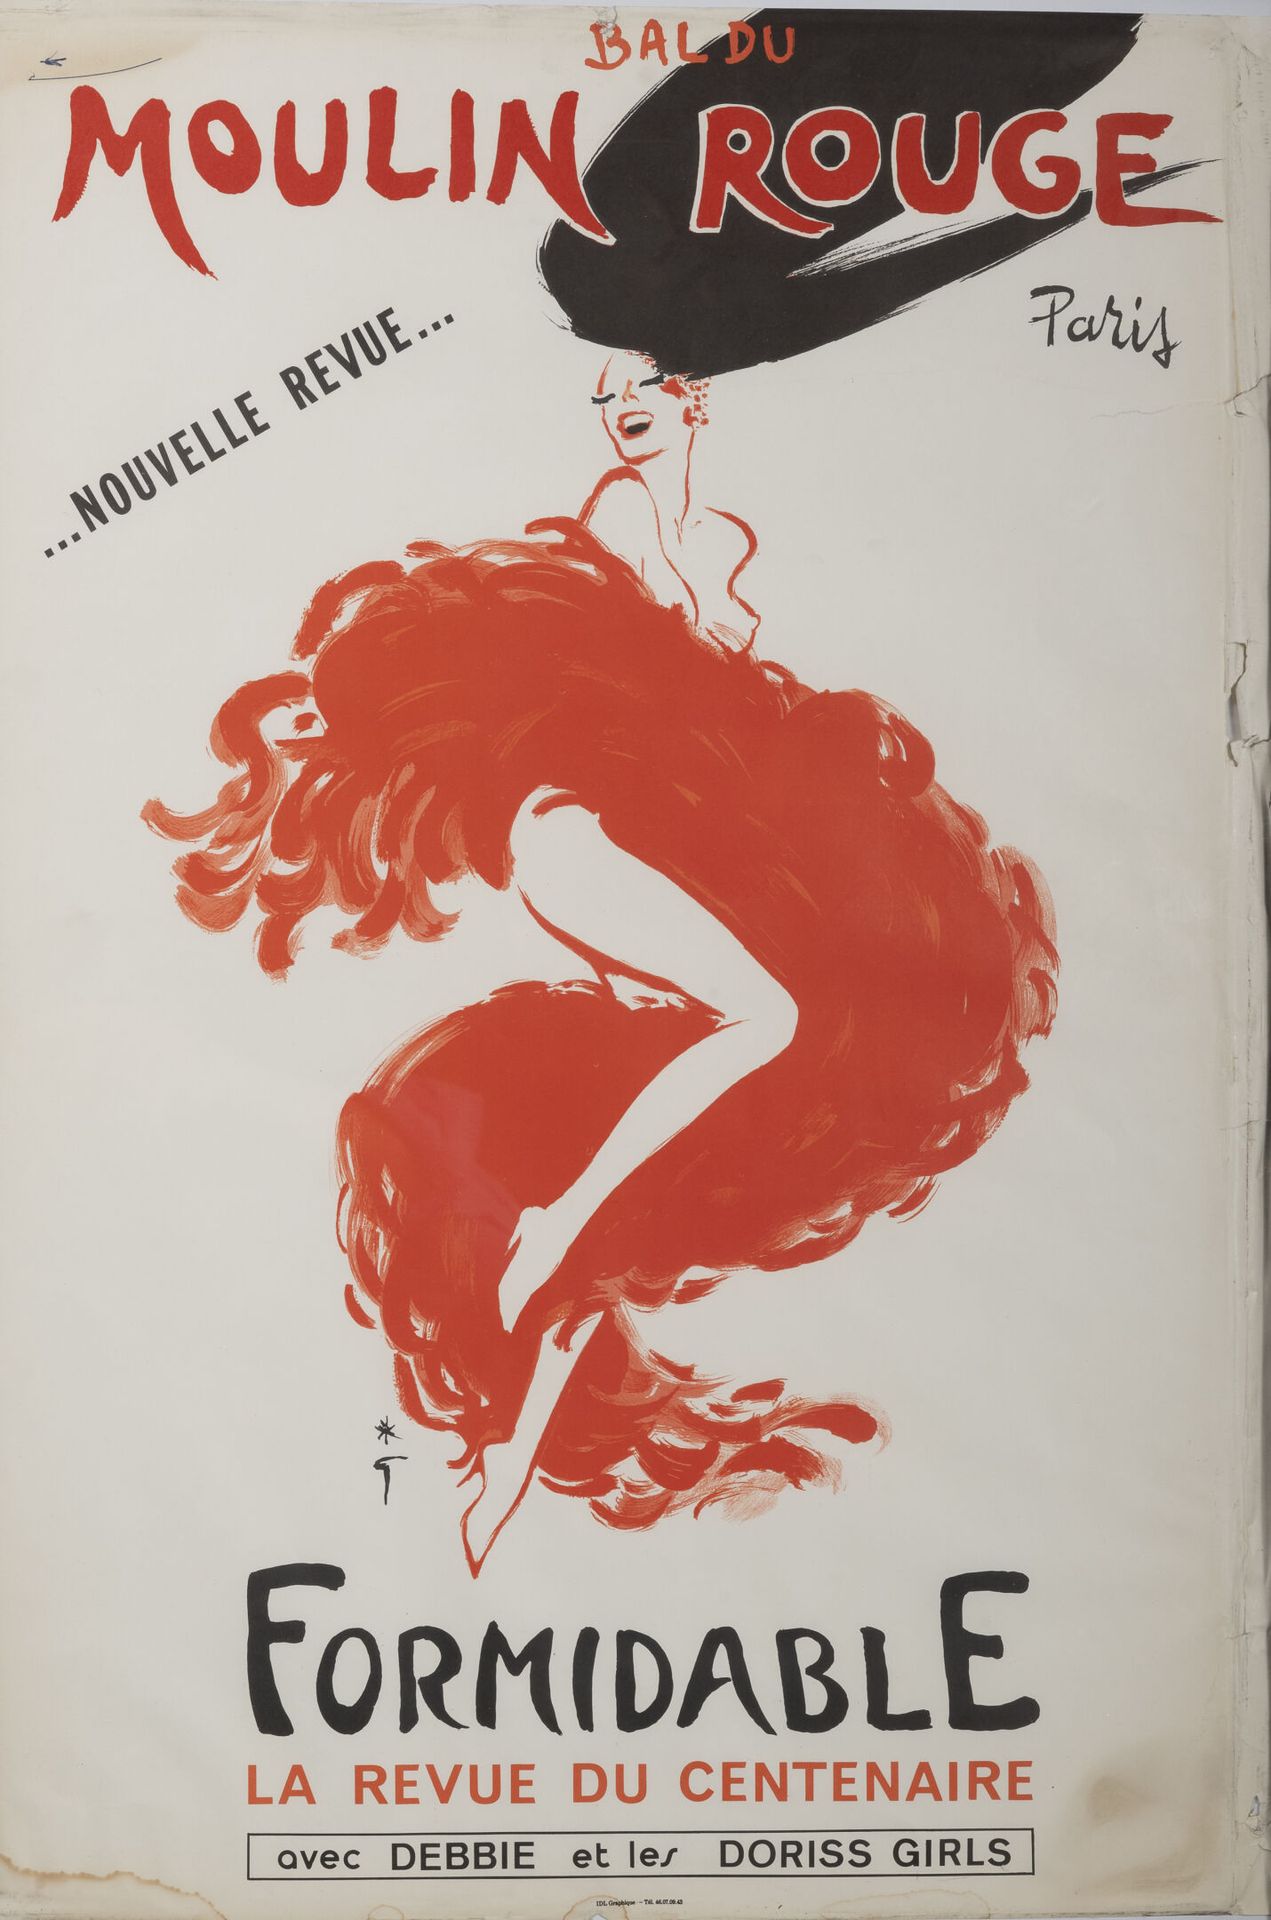 D'après René GRUAU Bal du moulin rouge.新的审查。

与黛比和多丽丝女孩一起演出的伟大的百年纪念活动。

纸上彩色海报。
&hellip;